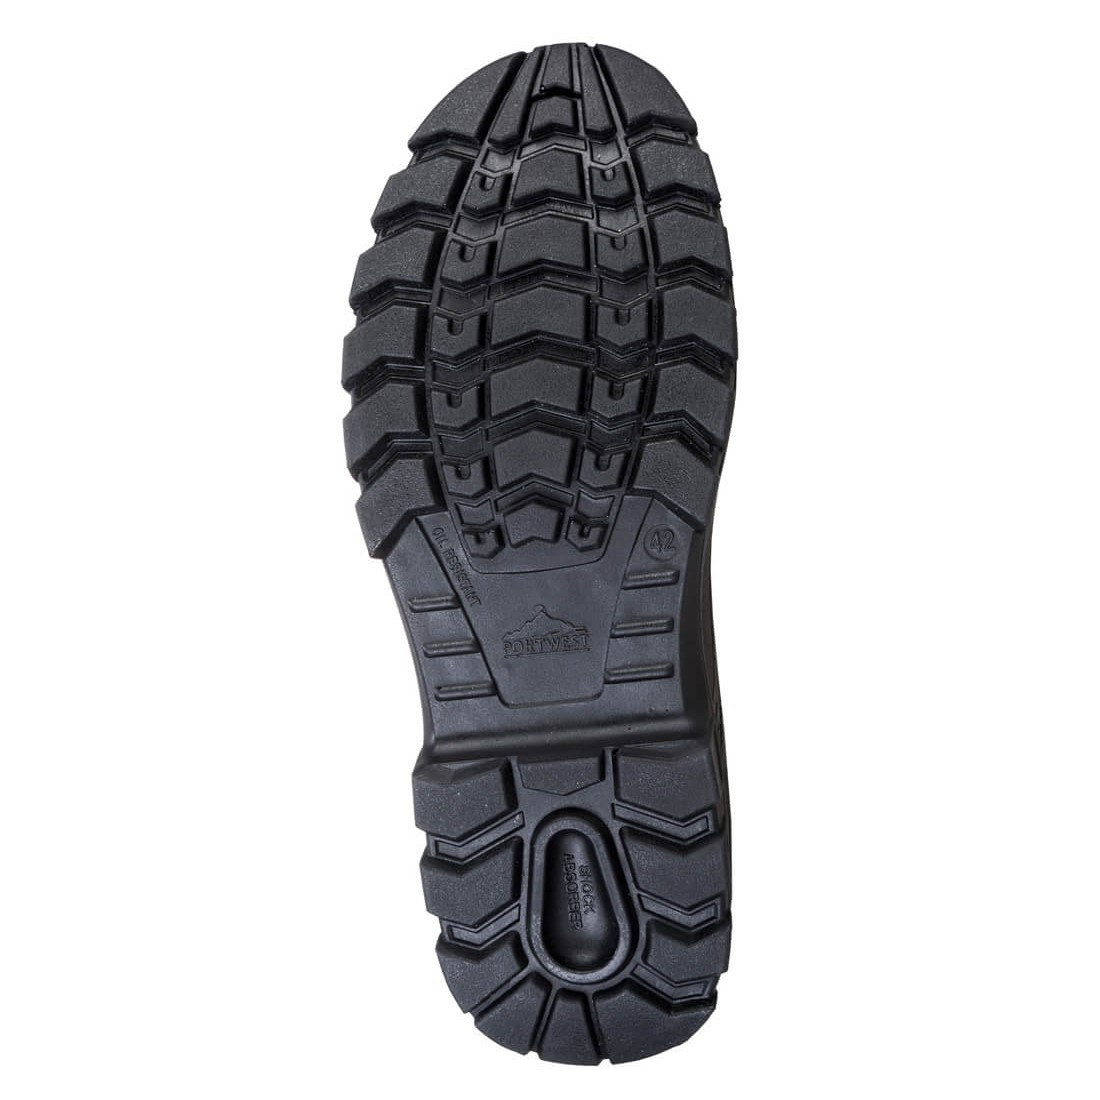 Pantof de Lucru O1 - Incaltaminte de protectie | Bocanci, Pantofi, Sandale, Cizme